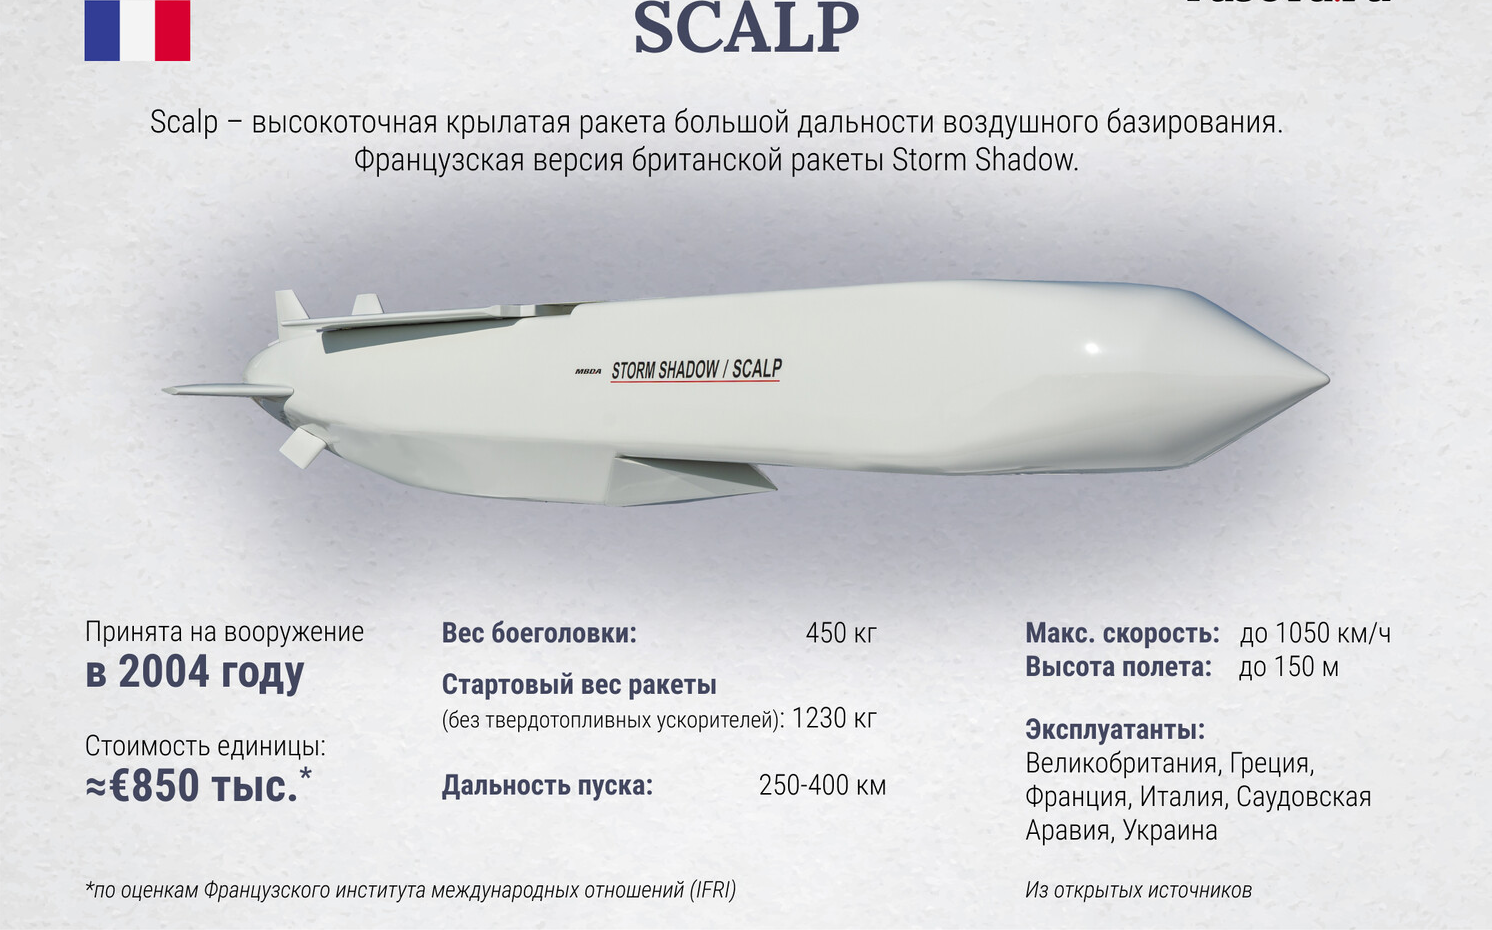 Крылатые ракеты Scalp характеристики. Крылатая ракета Storm Shadow / Scalp. Французские ракеты Scalp. Storm Shadow ракета дальность.